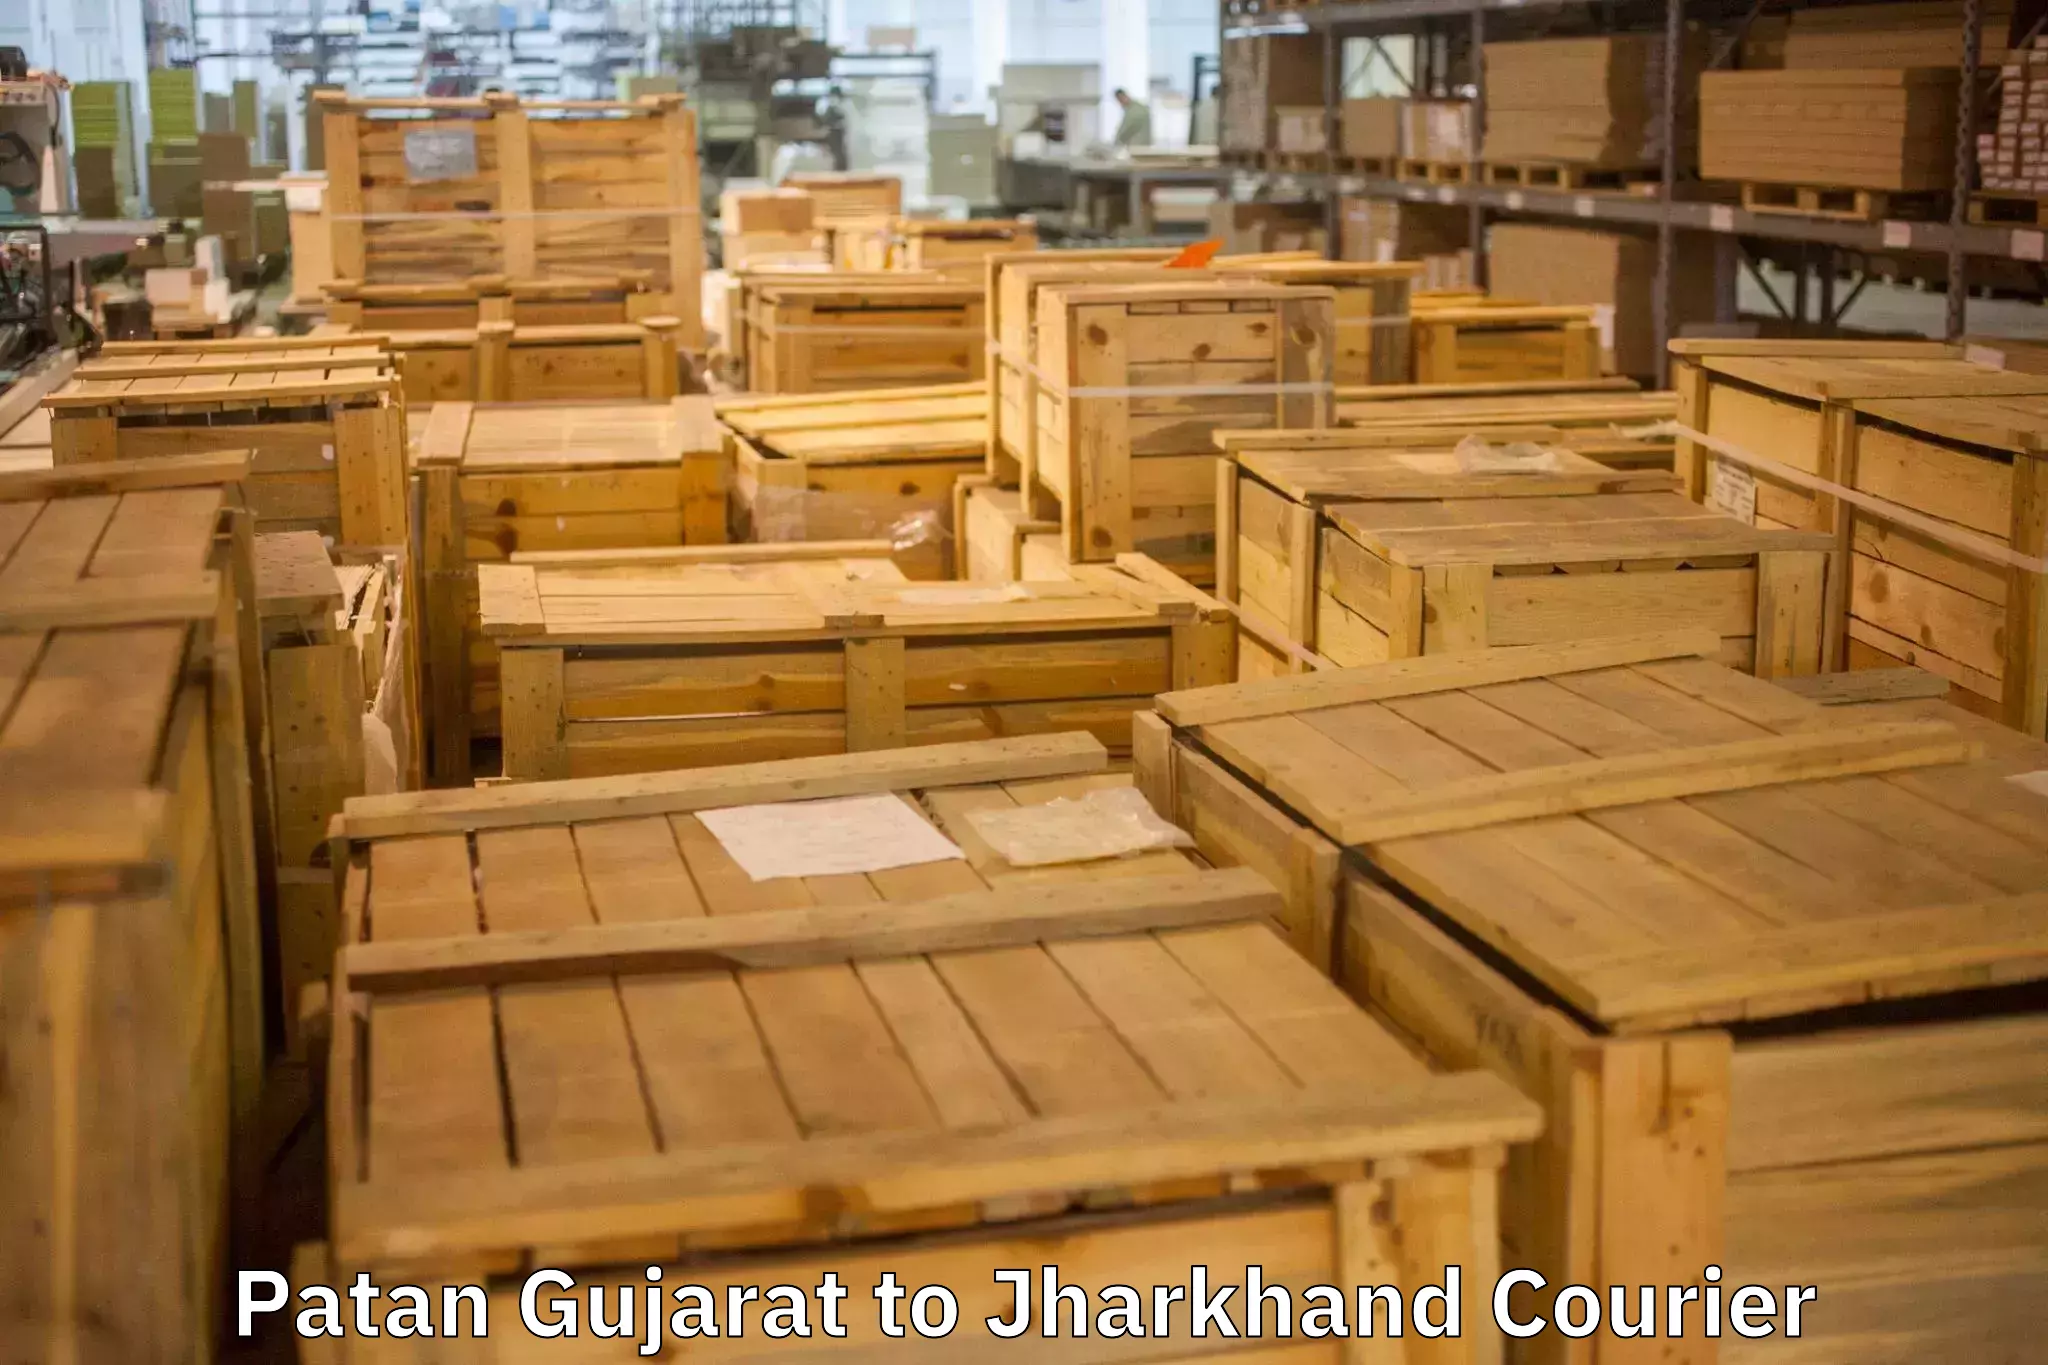 Efficient moving company Patan Gujarat to Padma Hazaribagh